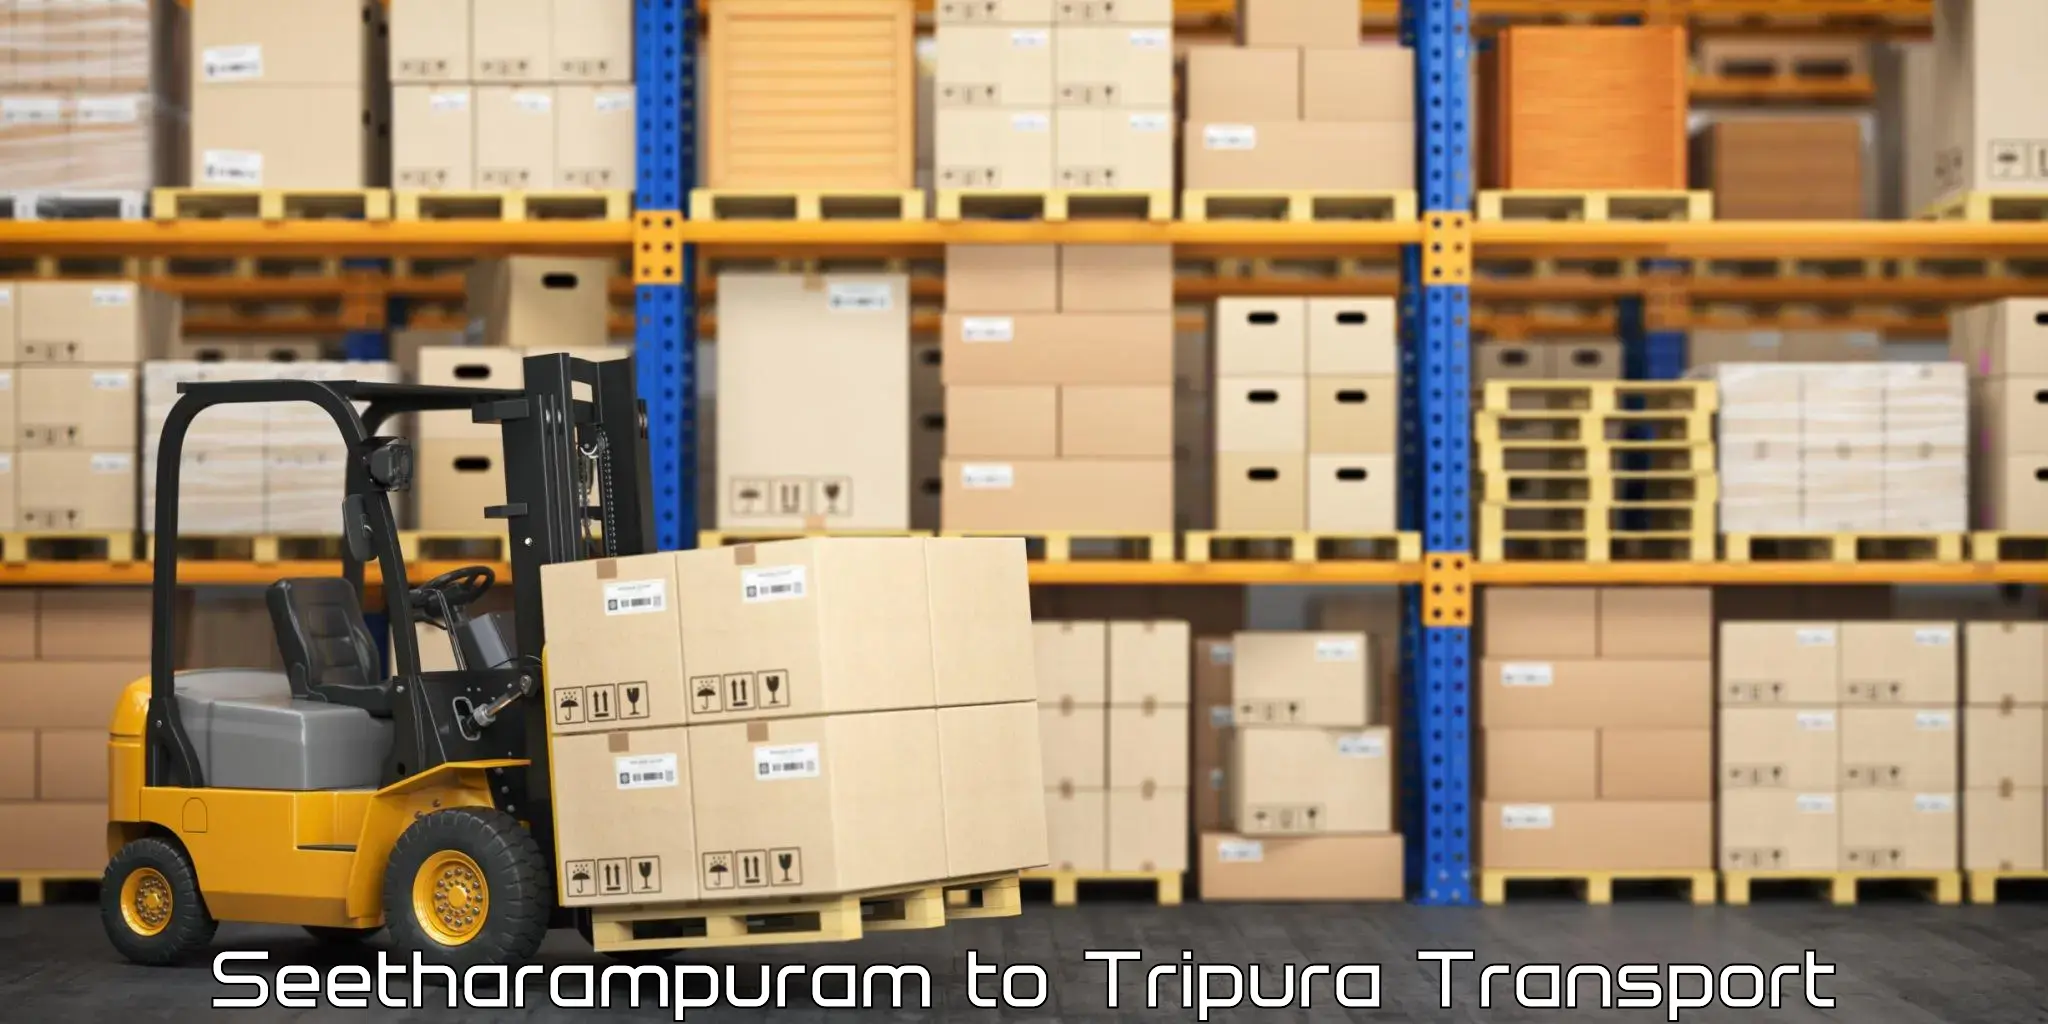 Transport in sharing in Seetharampuram to Tripura